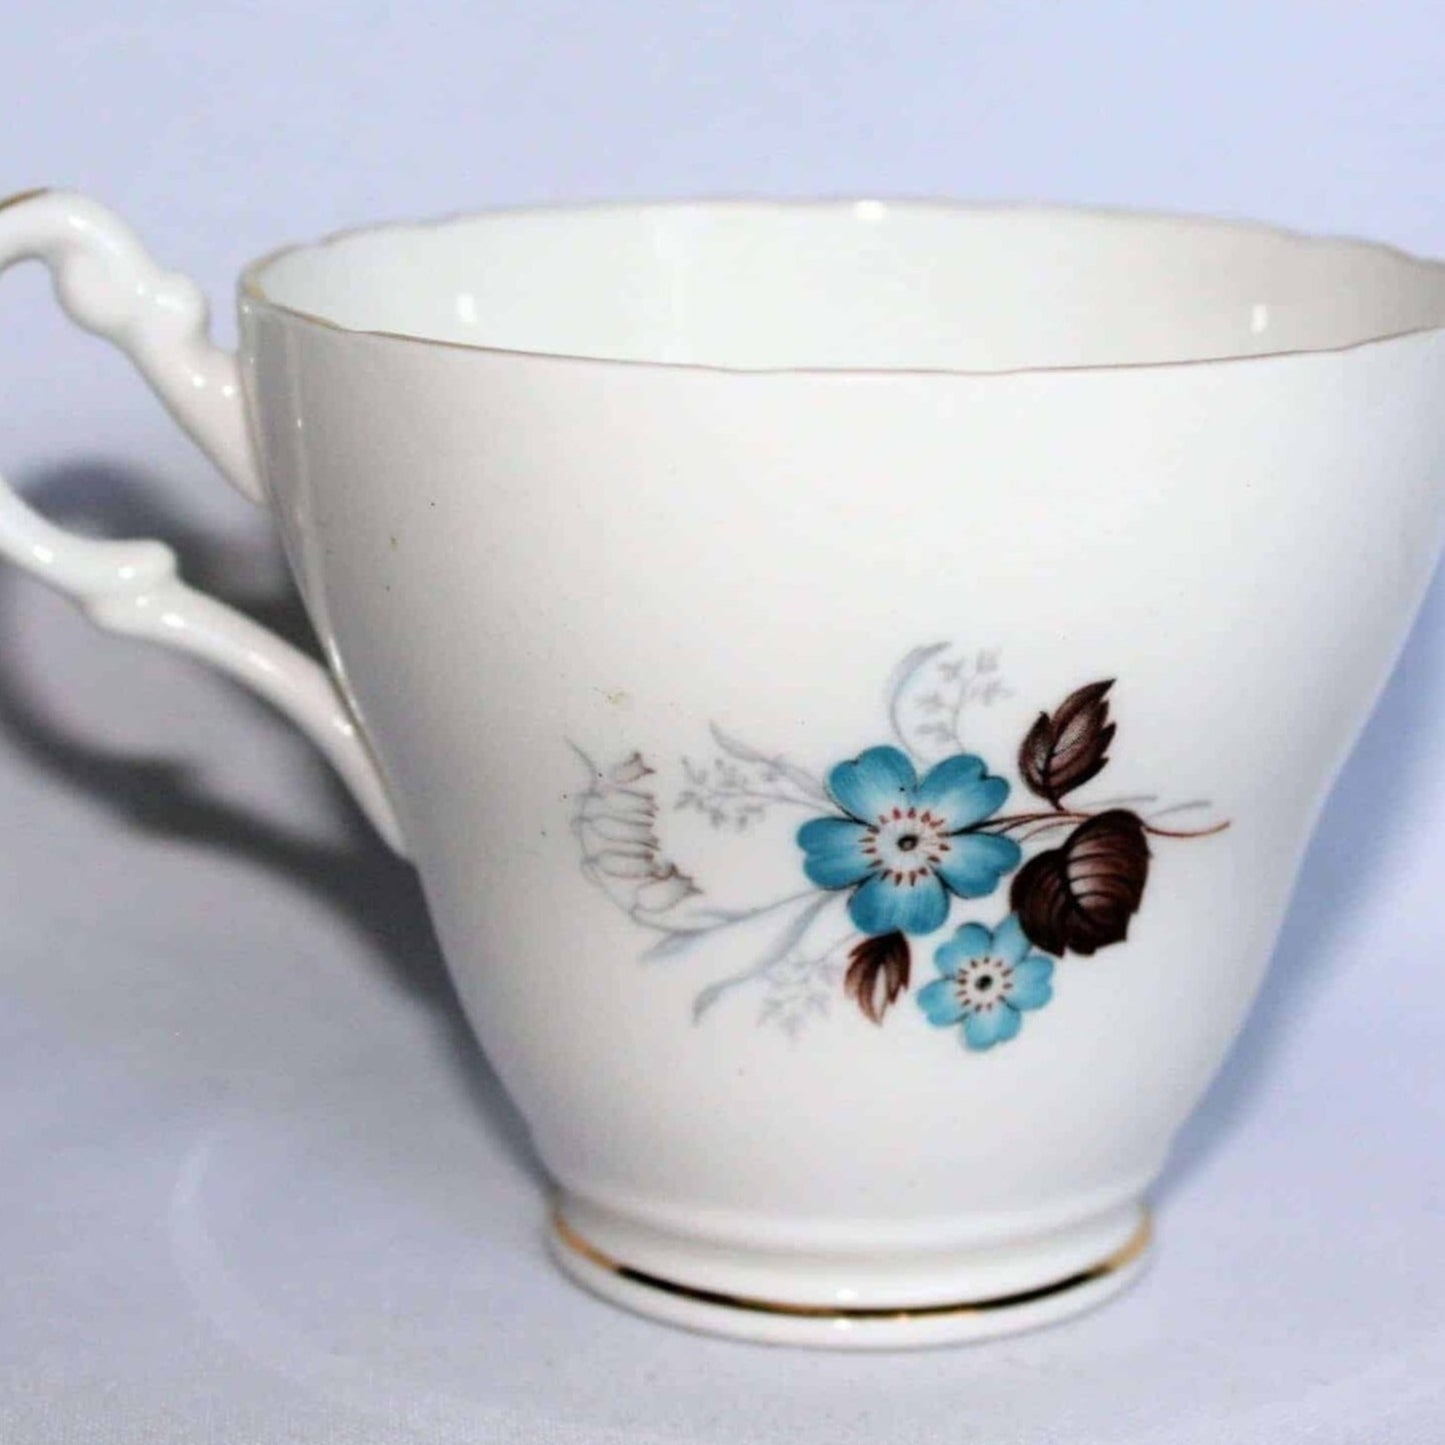 Teacup and Saucer, Royal Ascot, Aqua Flowers, Bone China, Vintage